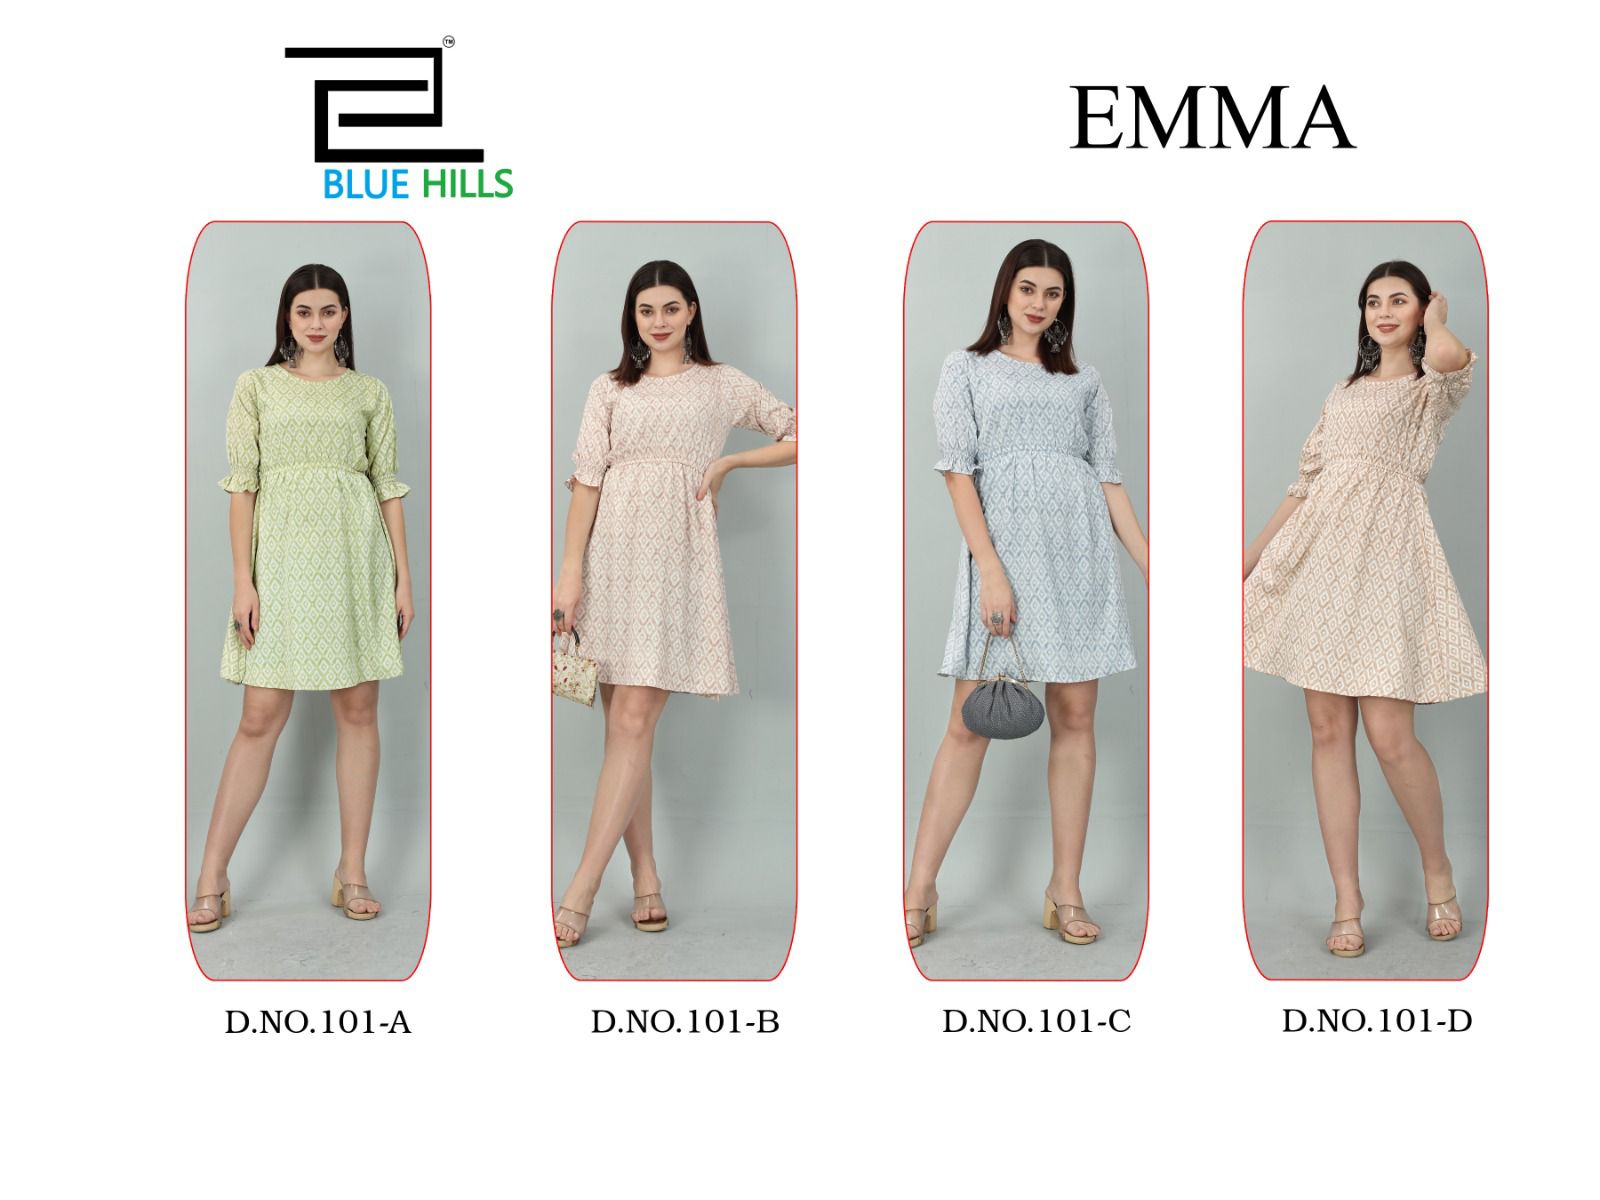 Blue Hills Emma collection 4